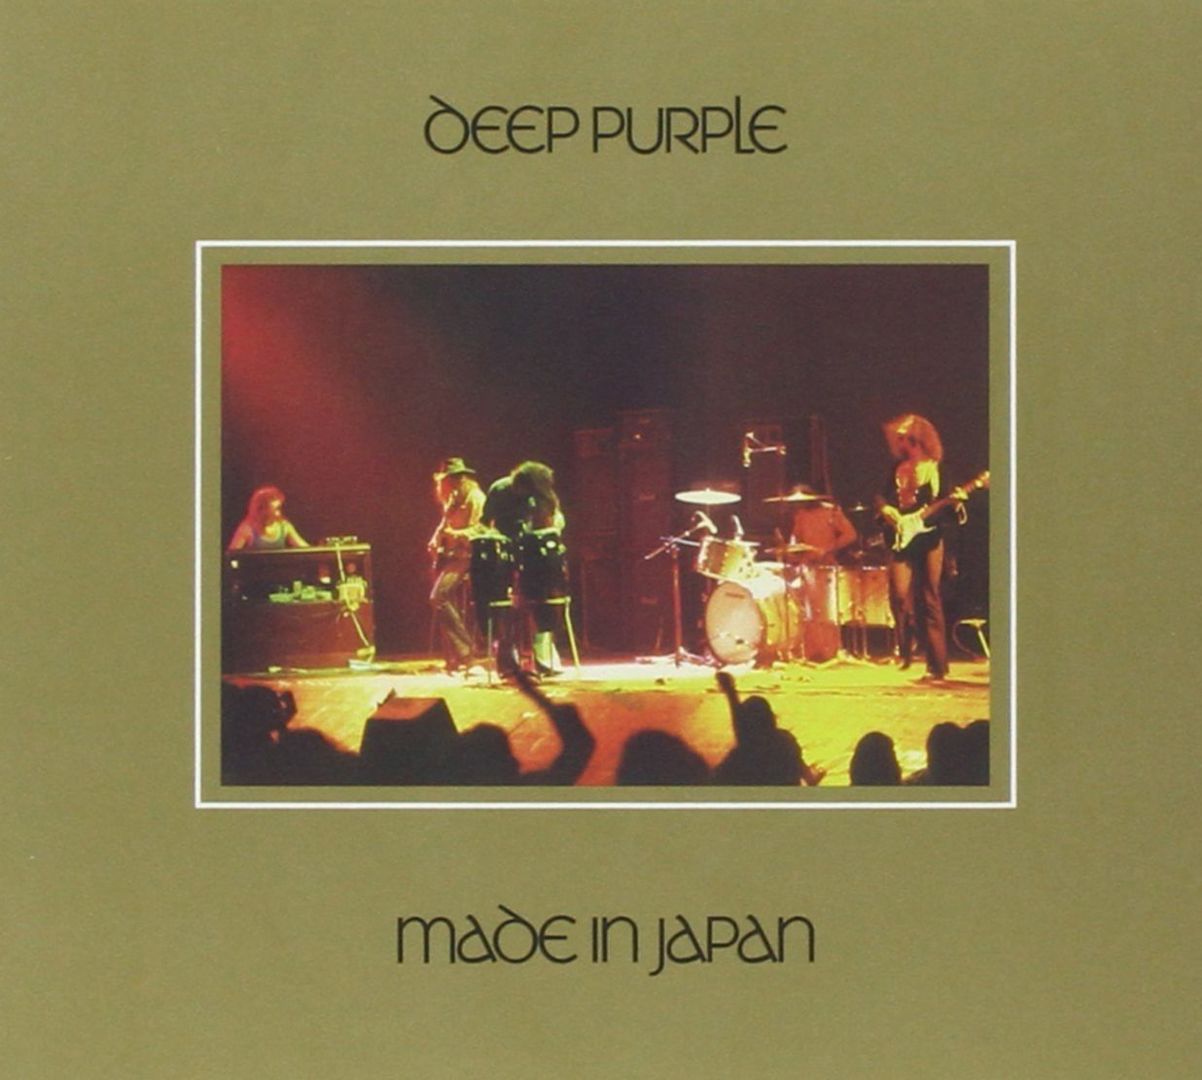 DEEP PURPLE - MADE IN JAPAN (1972)